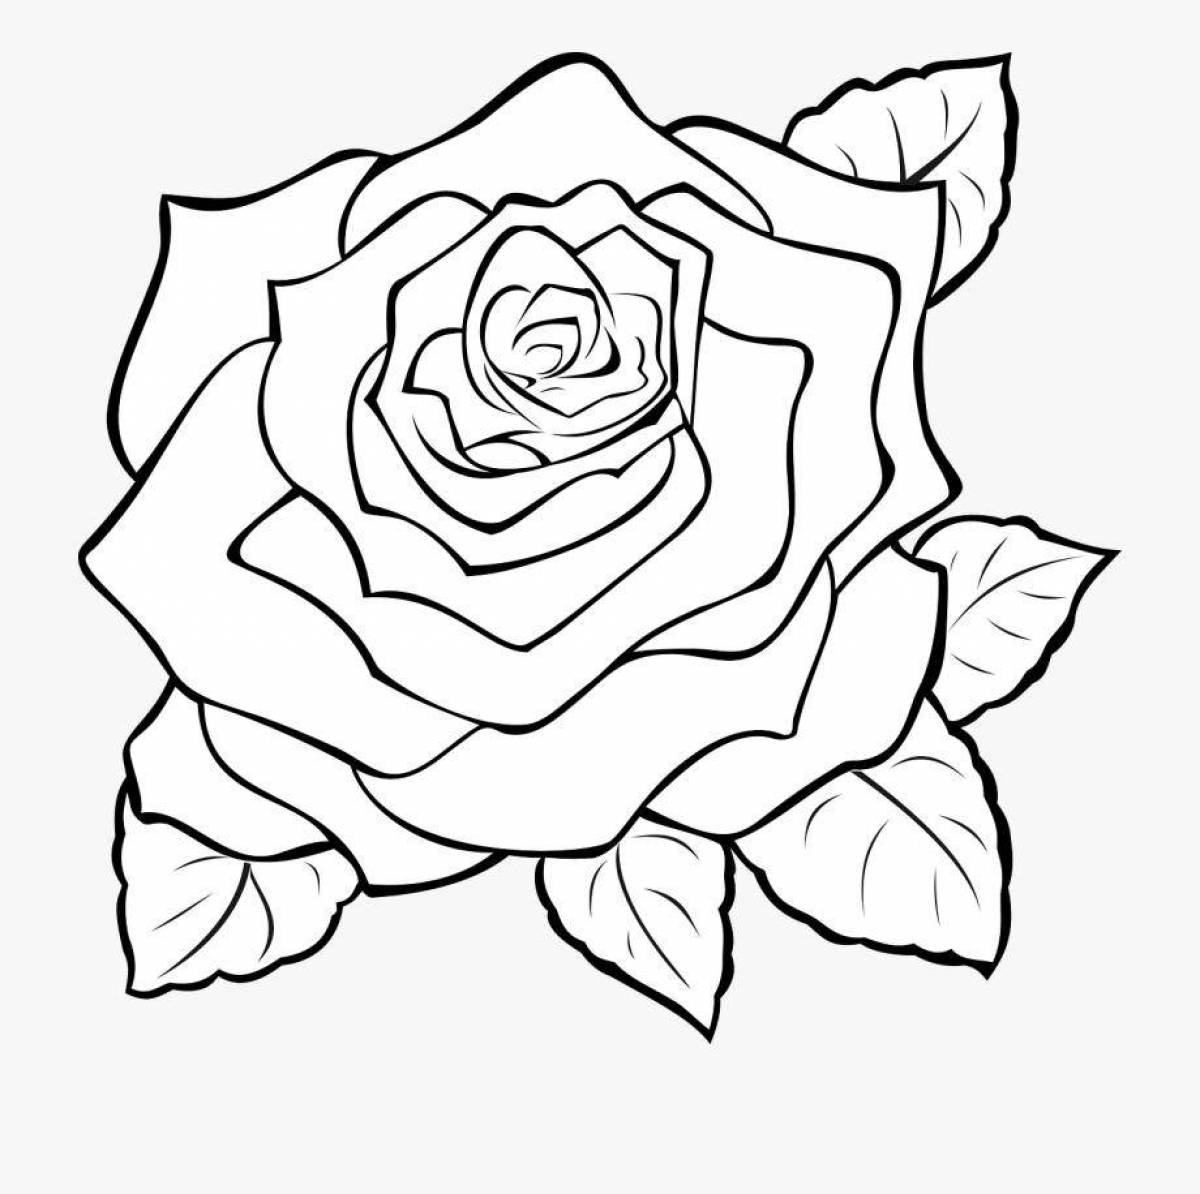 Delightful rose coloring book